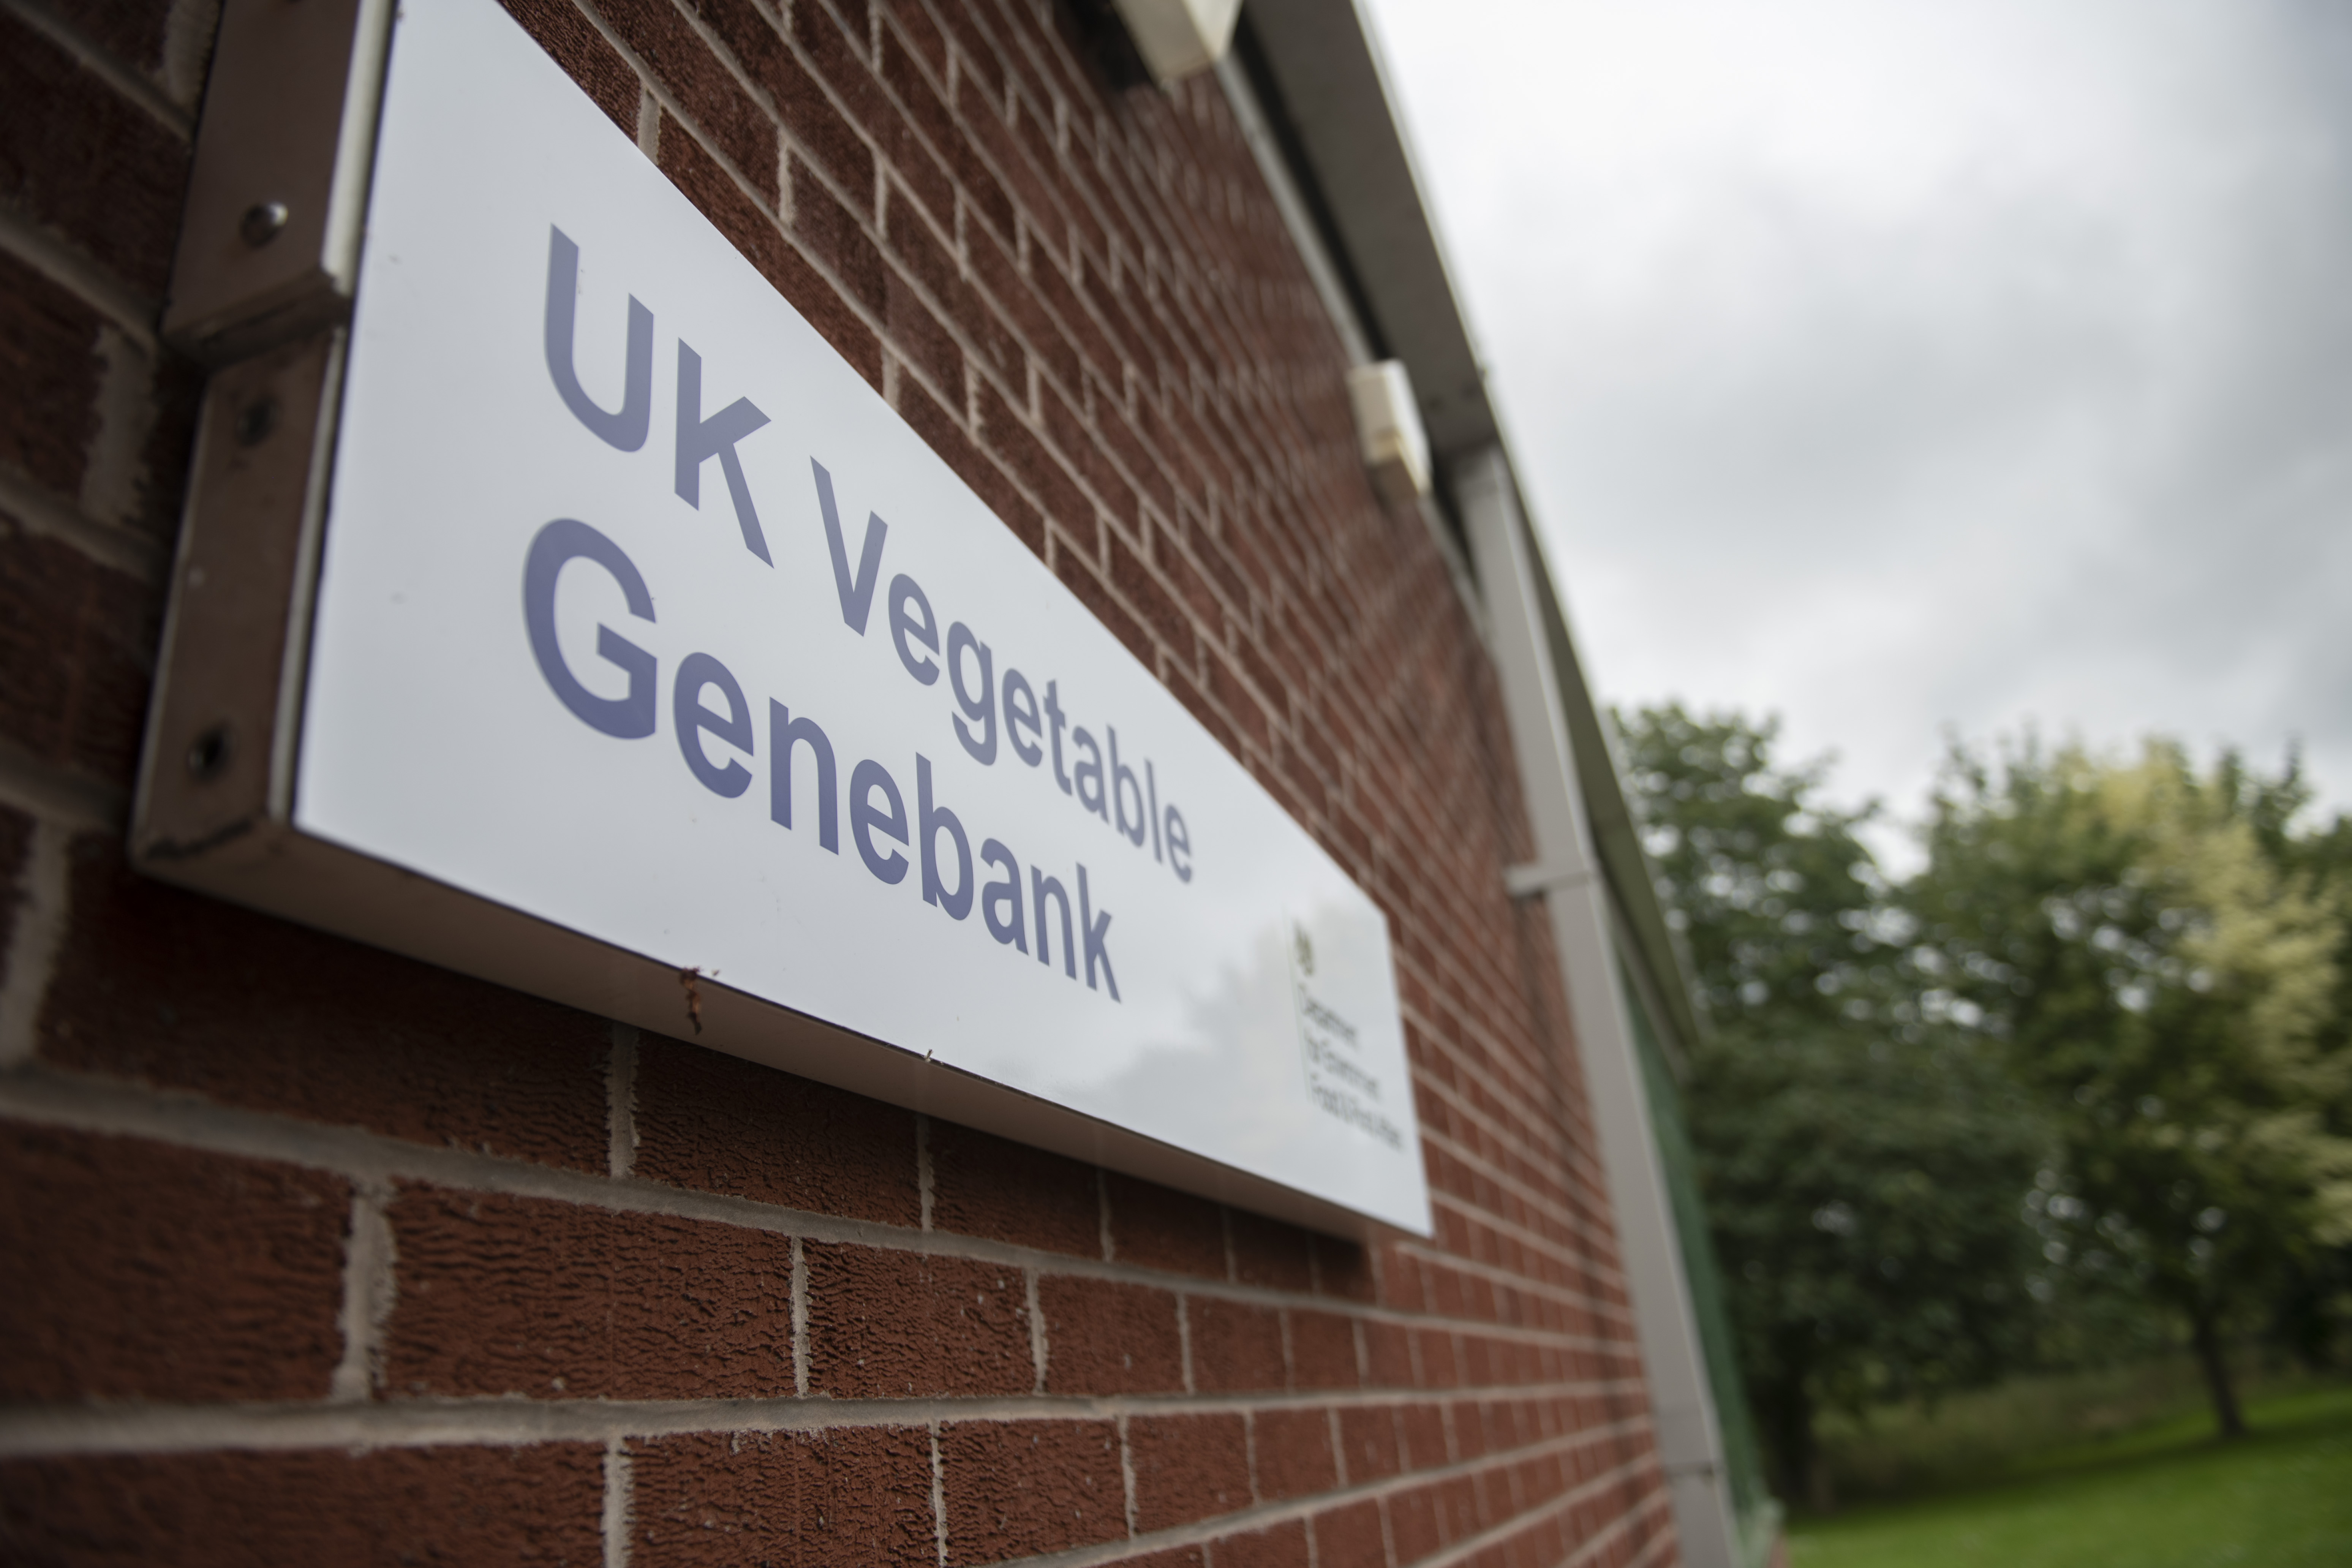 UK Vegetable Genebank sign